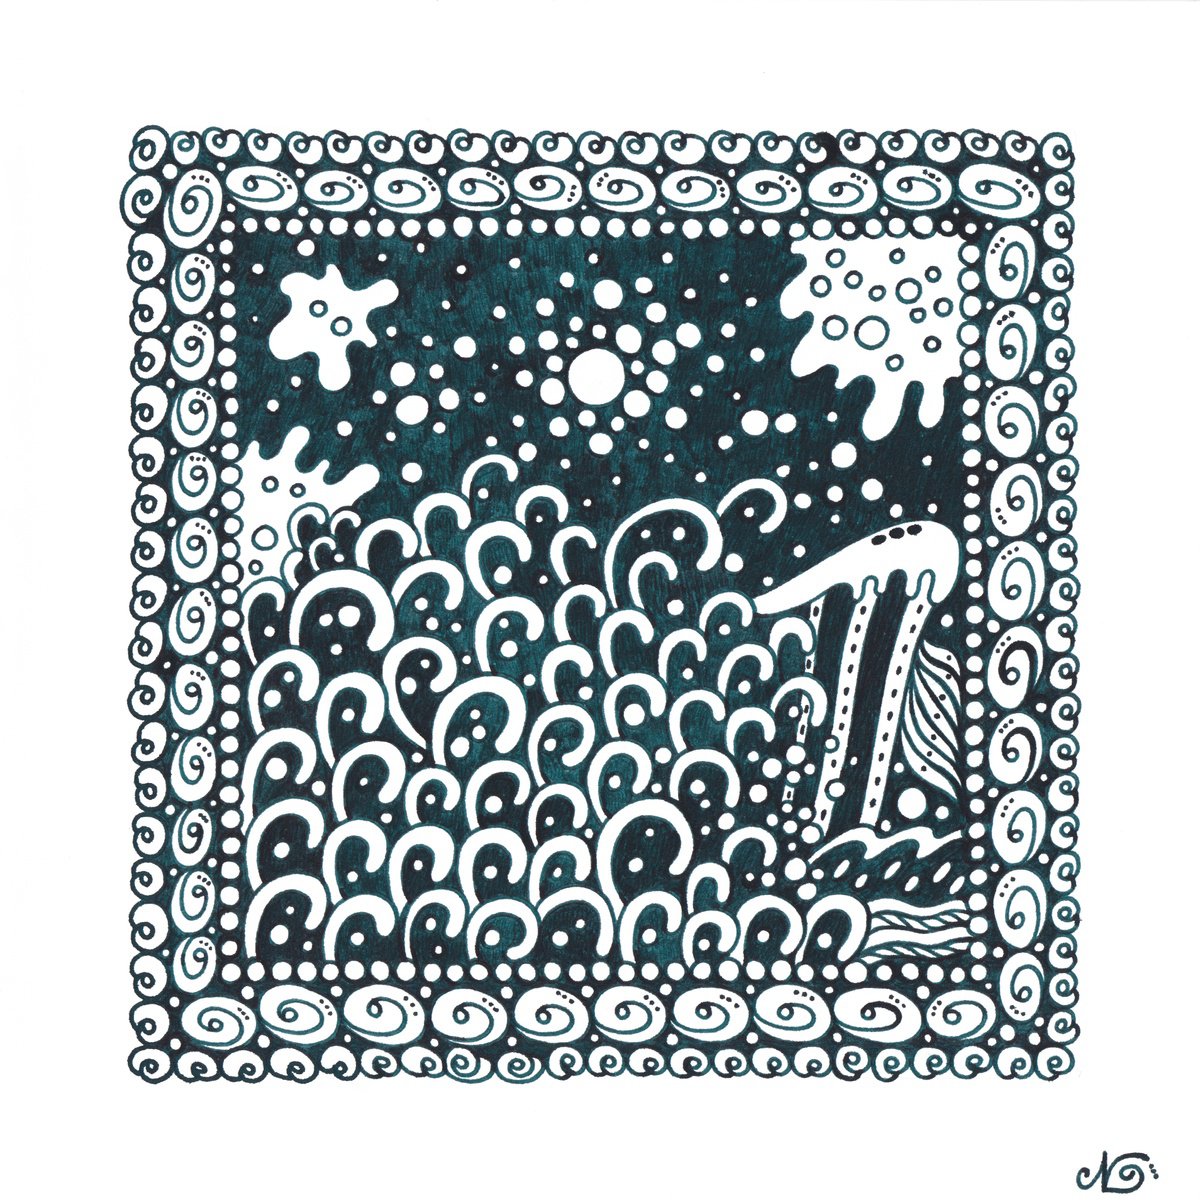 Surreal Pattern n.49 - Sea Foam by Veronika Demenko